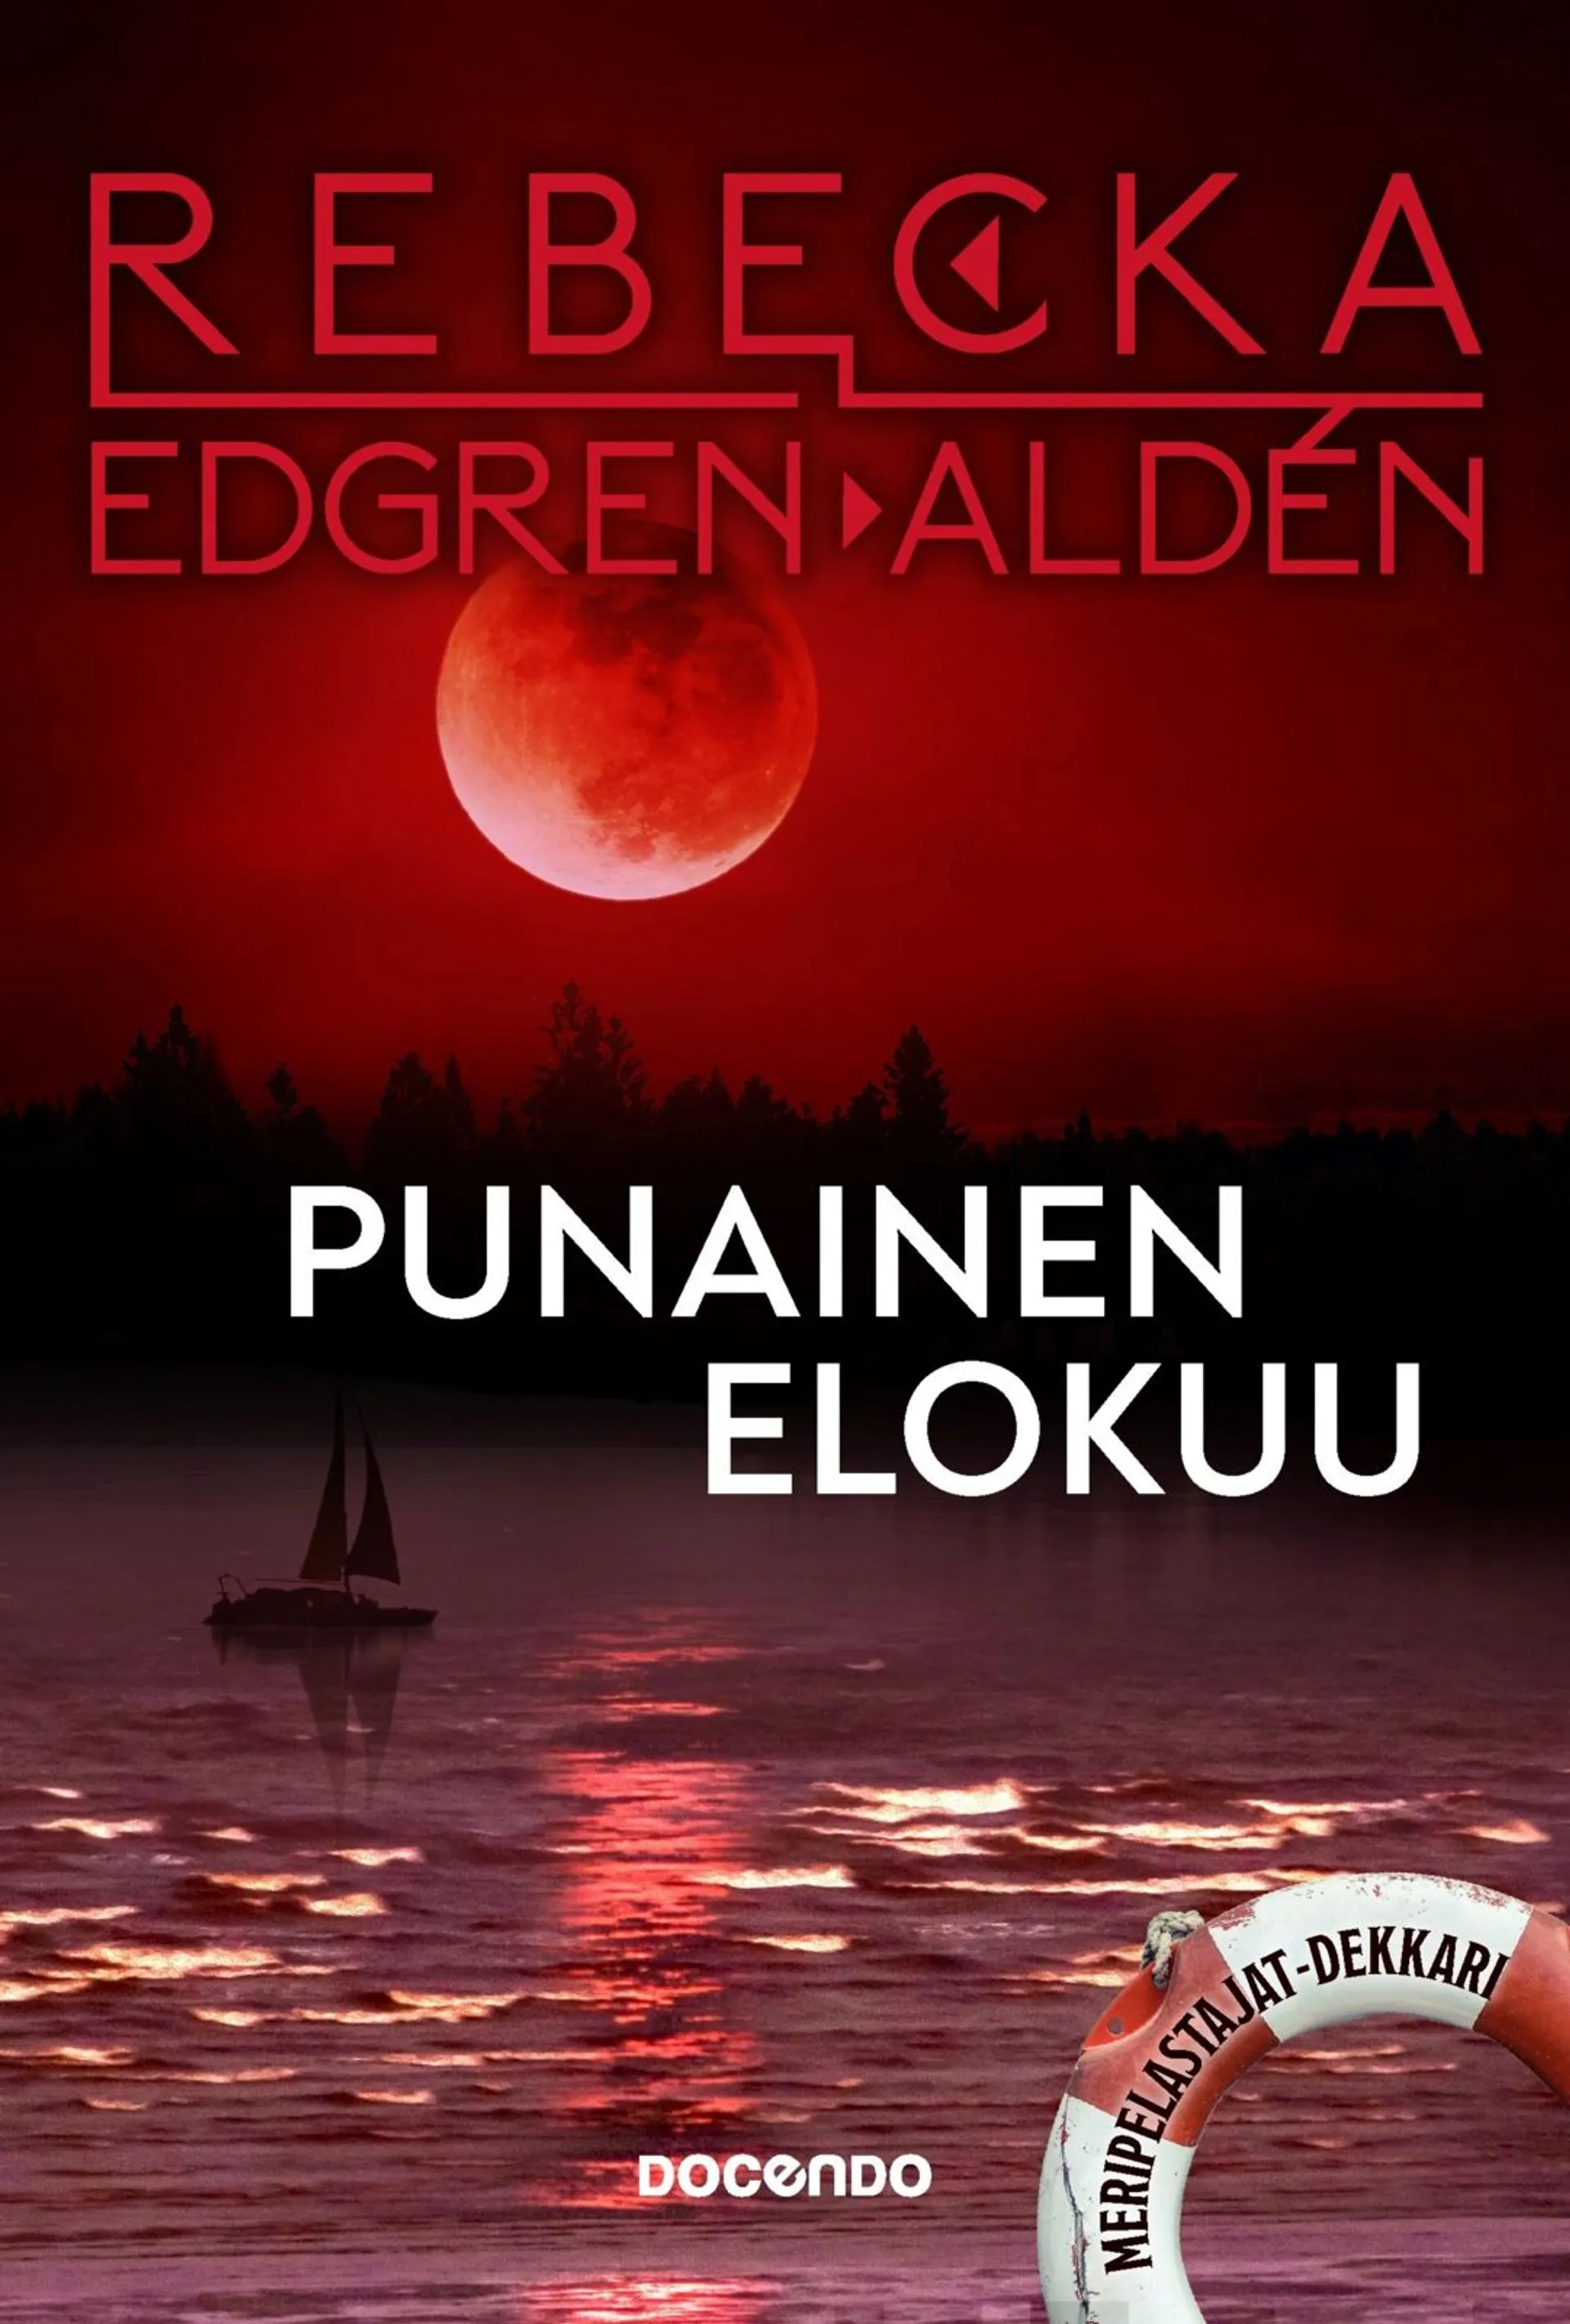 Edgren Aldén, Punainen elokuu